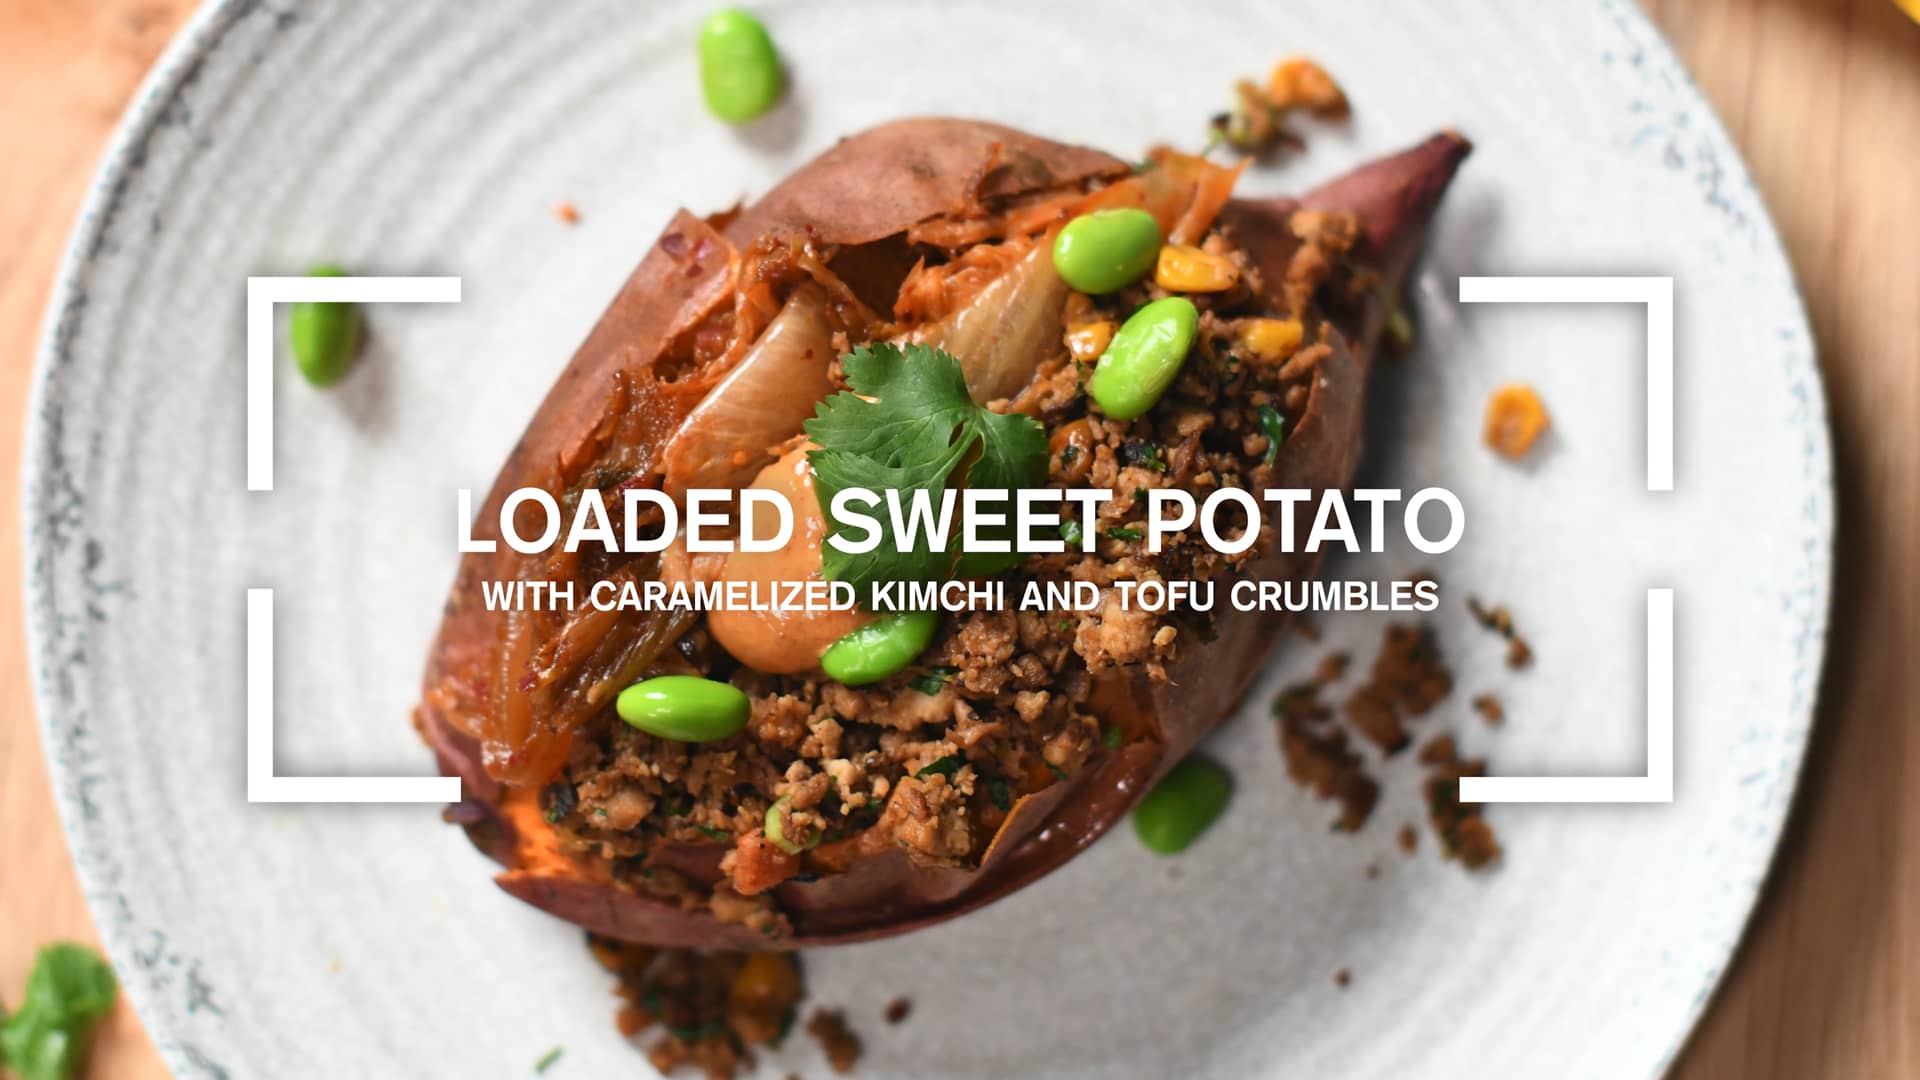 Pulmuone - Loaded Sweet Potato v2 on Vimeo